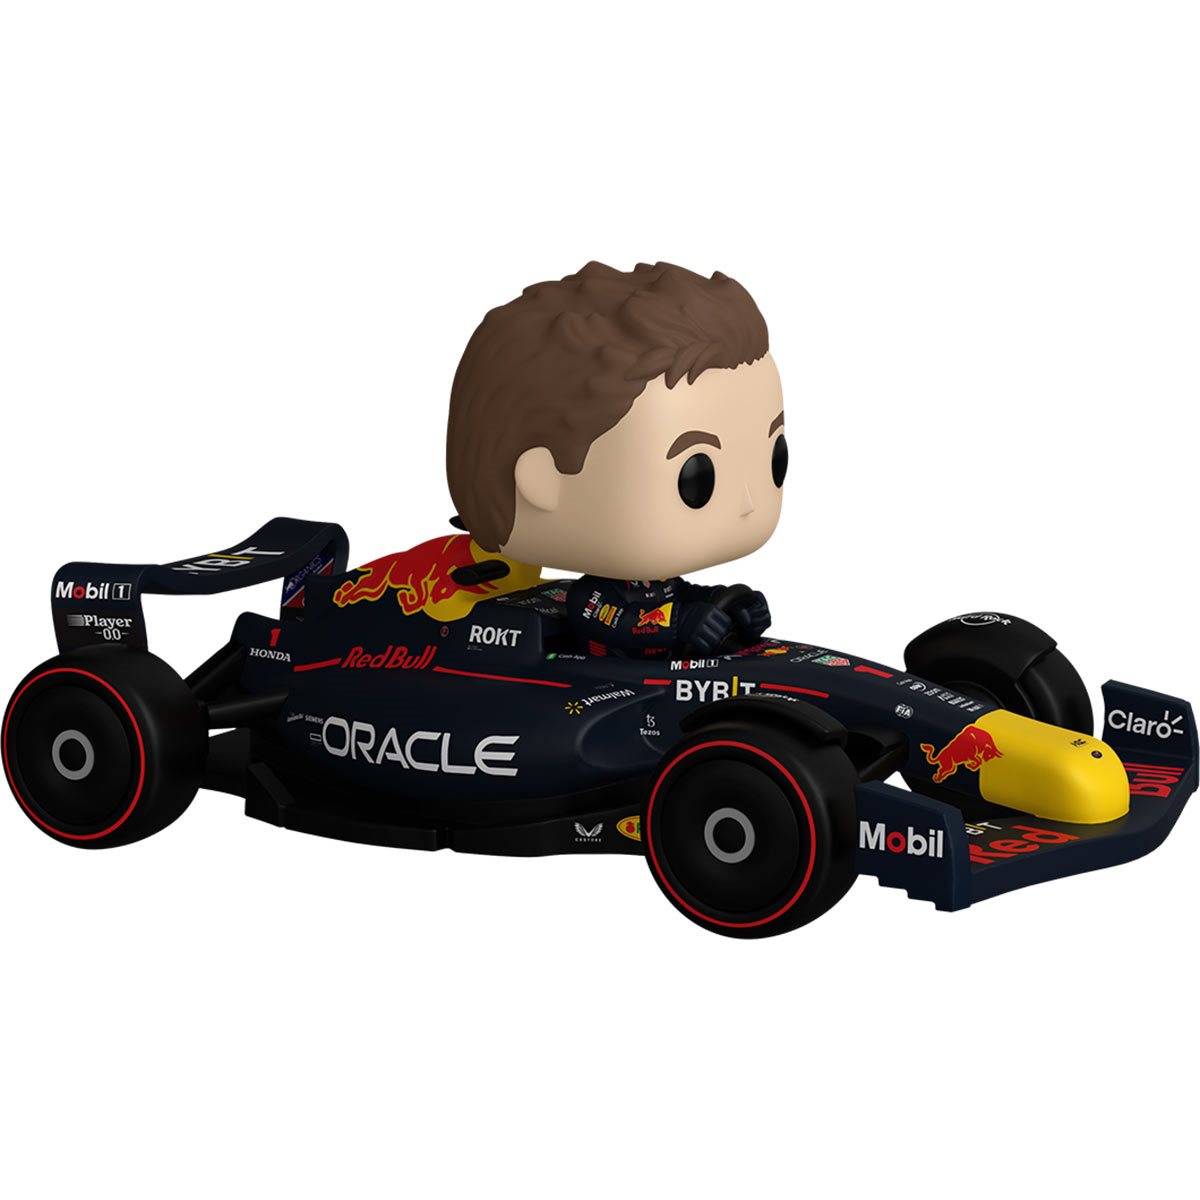 FUNKO POP Rides Super Deluxe: Formula 1 - Max Verstappen, #307